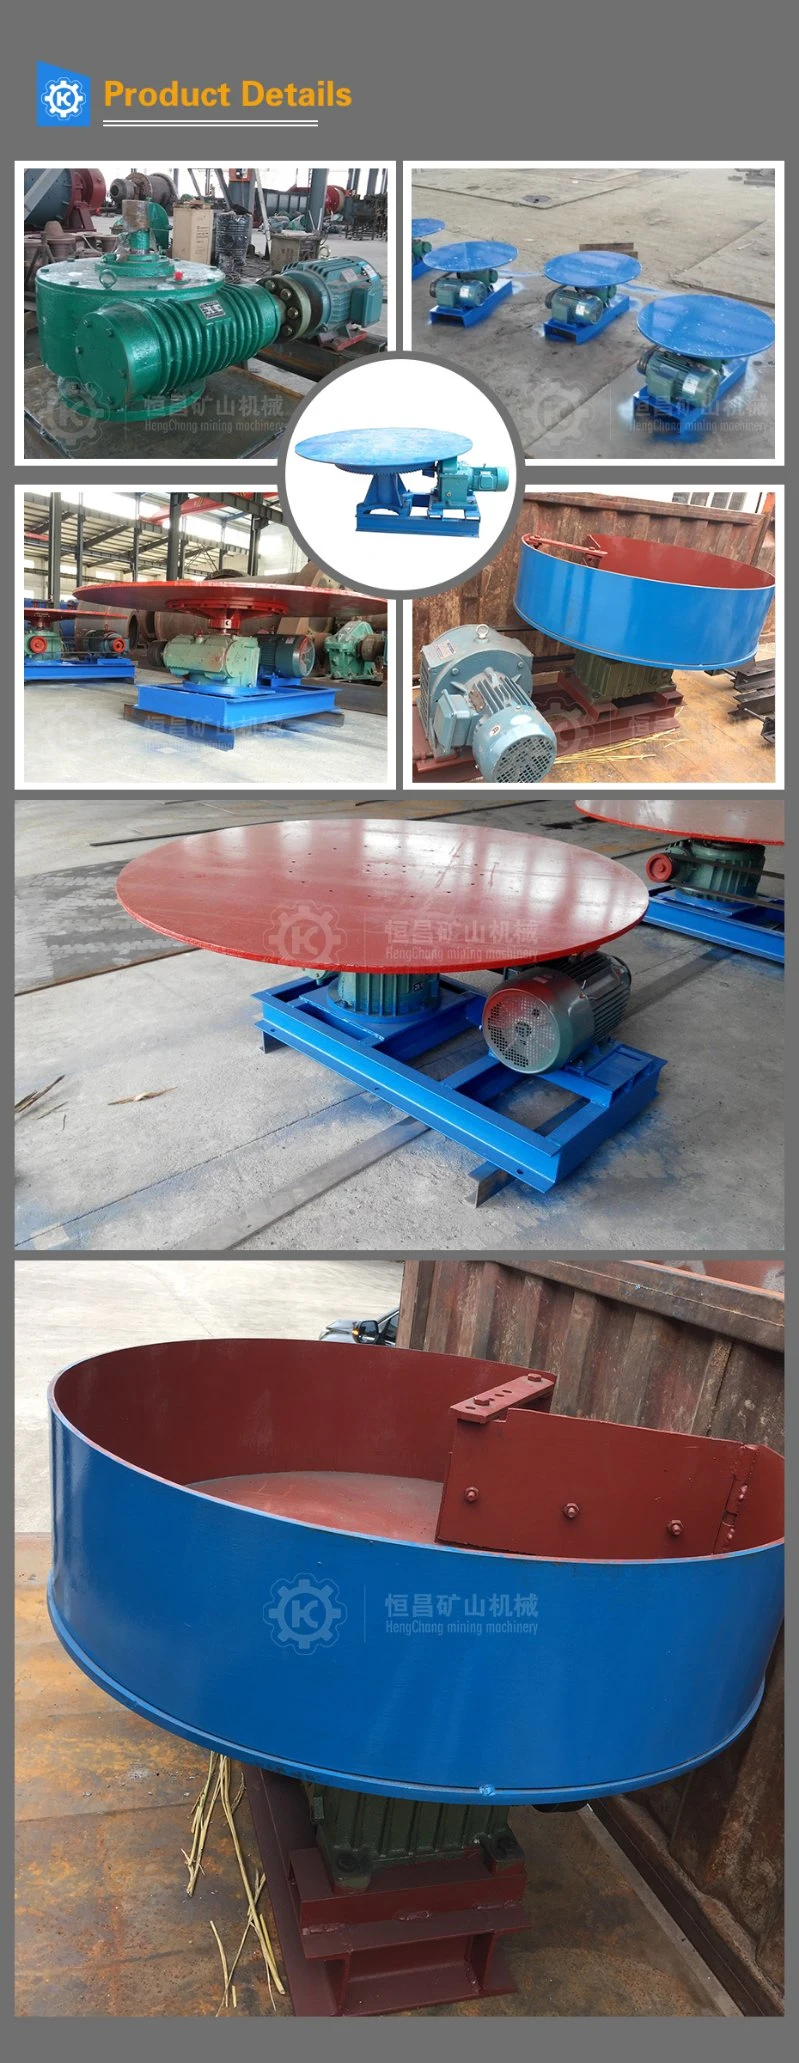 China Supplier Mining Round Disk Vibration Bowl Feeder